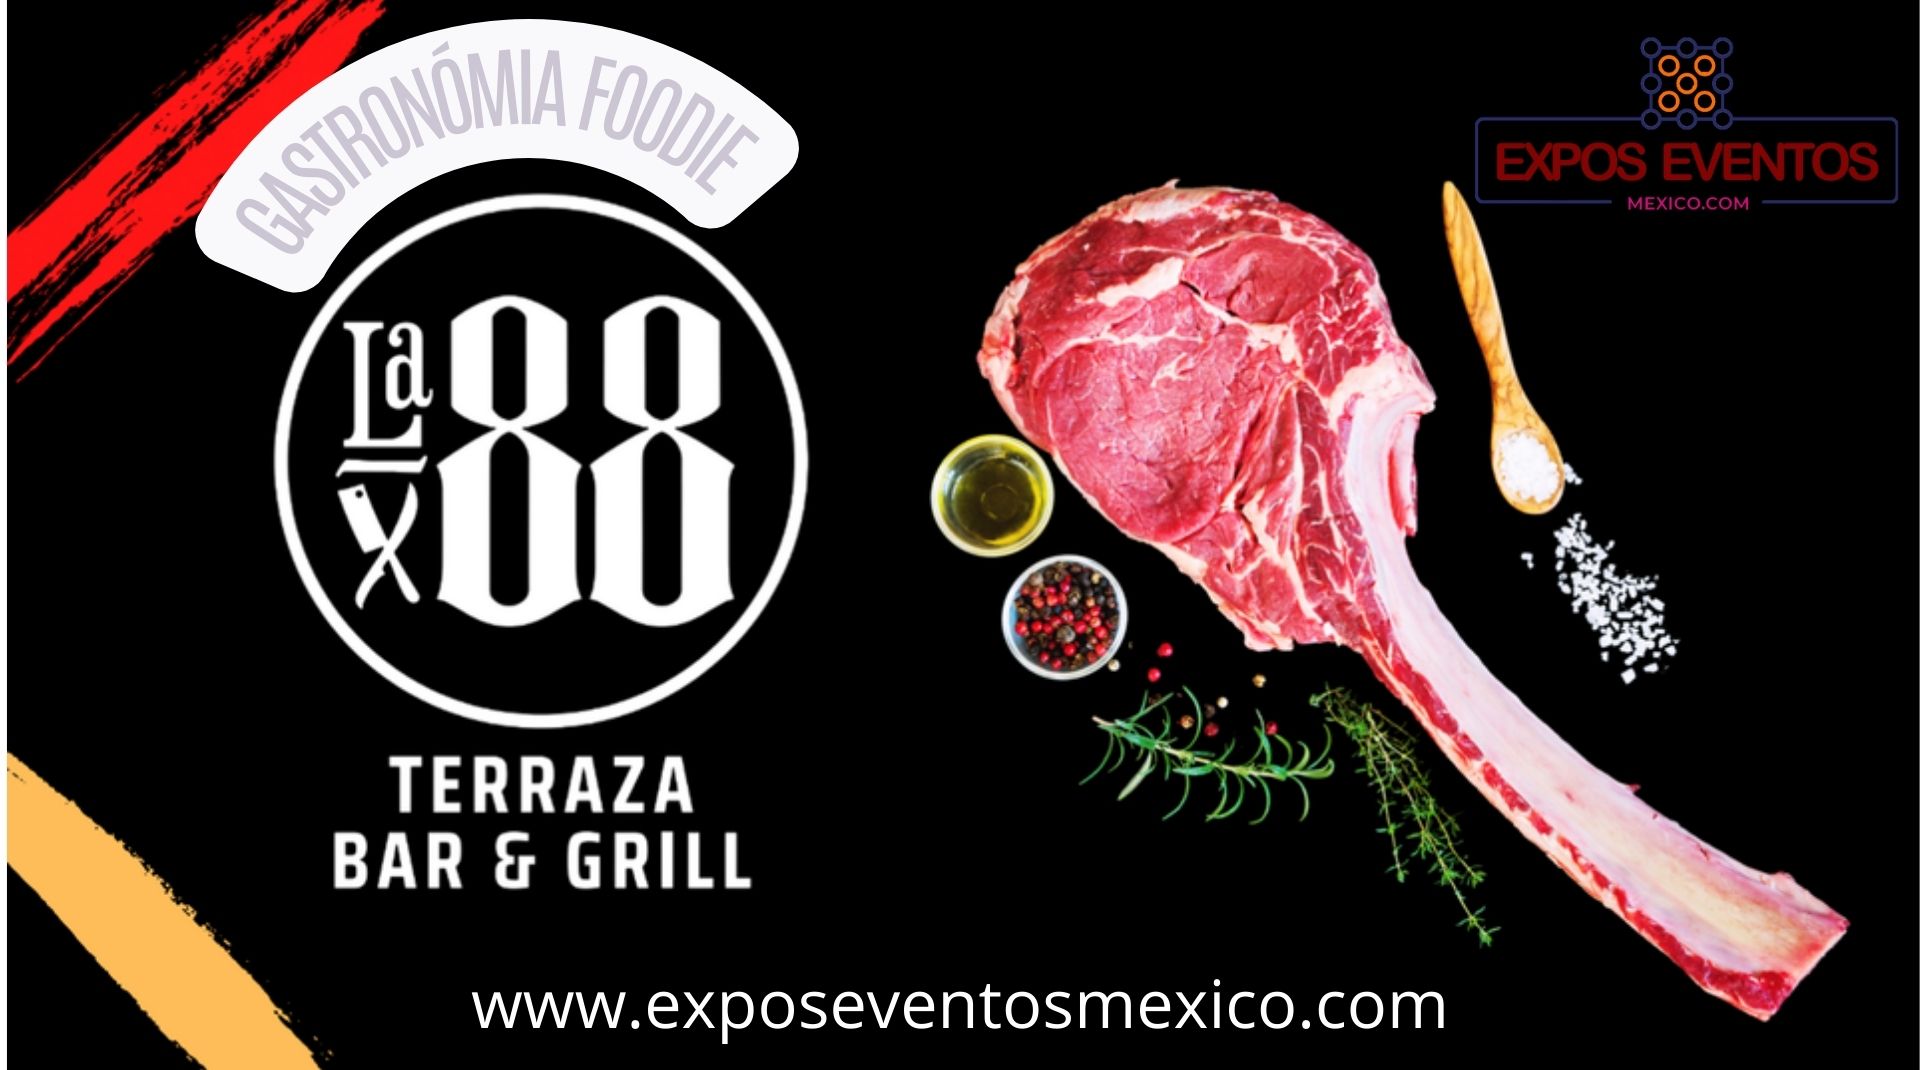 Restaurante La 88 Terraza Bar & Grill Avenida Aztecas 81 Coyoacán Ciudad de México